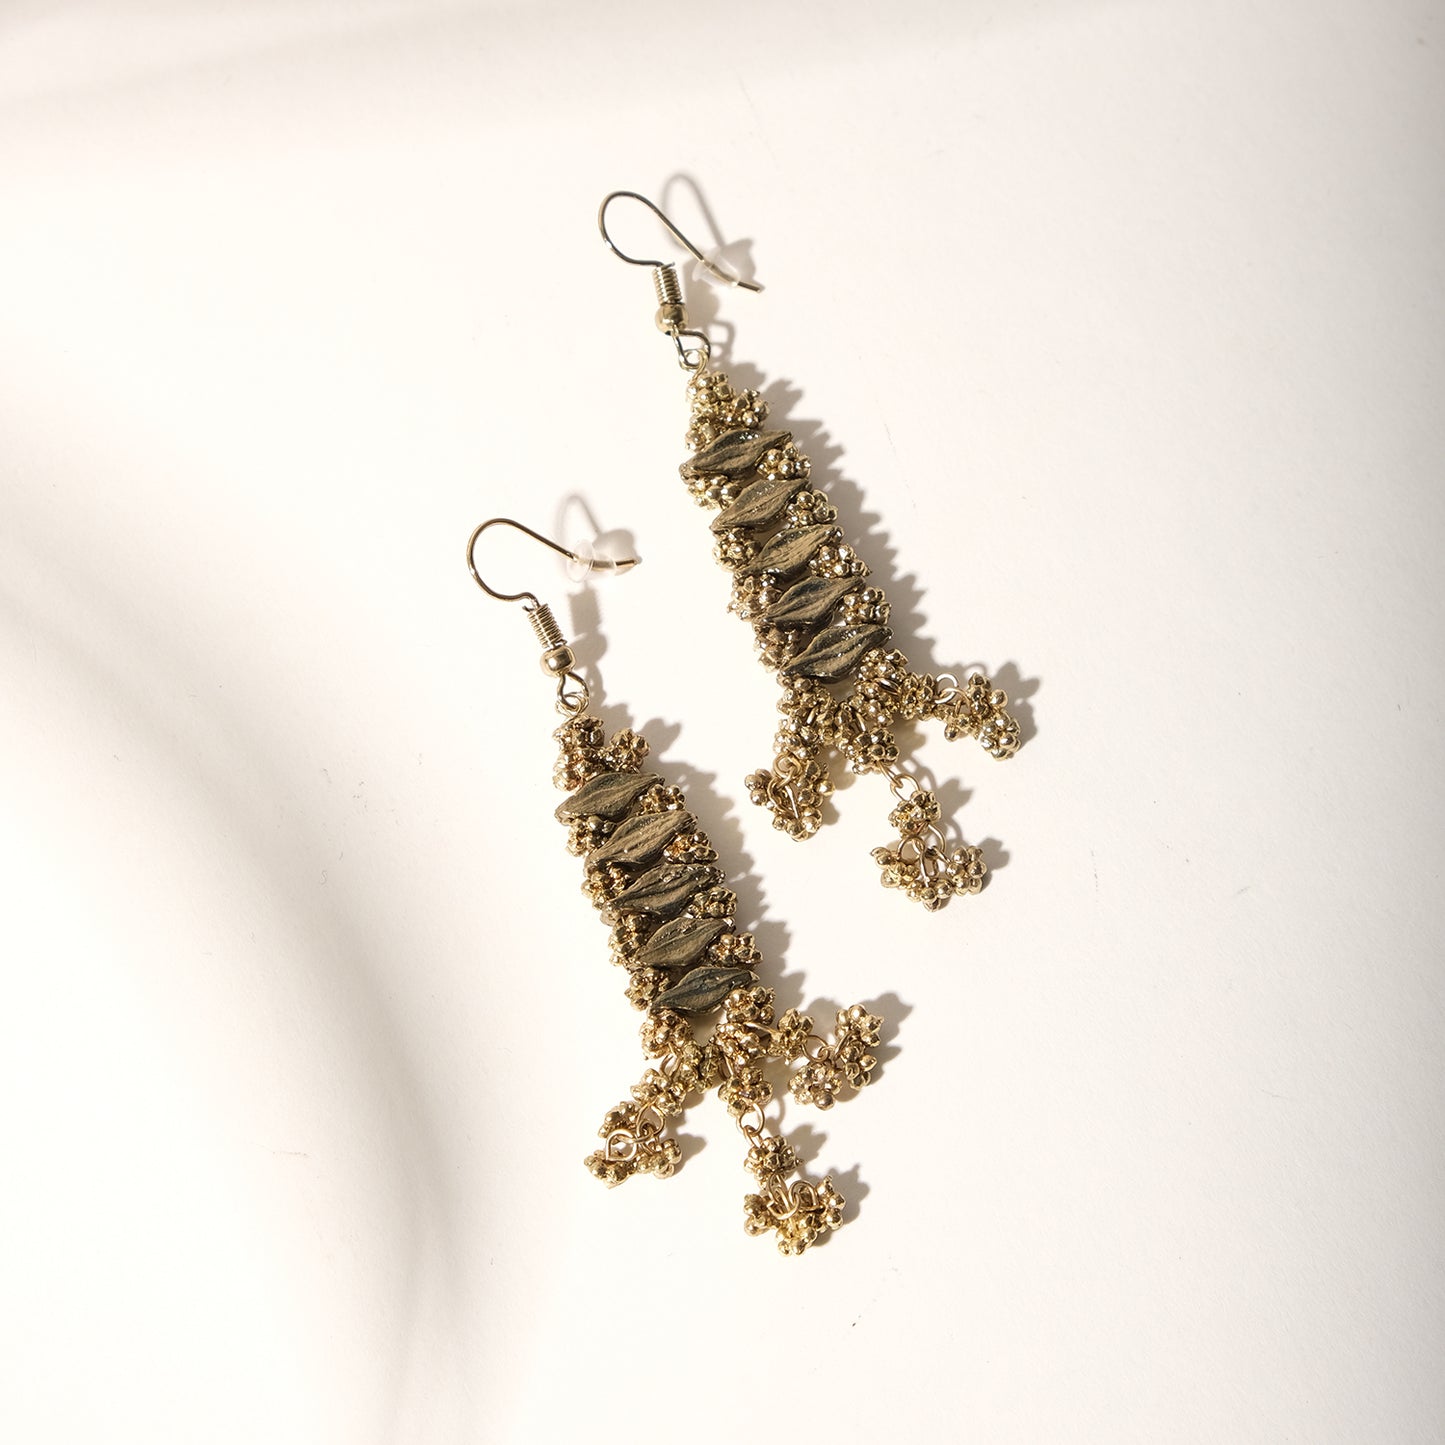 Antique Floral Beads Hook Earrings